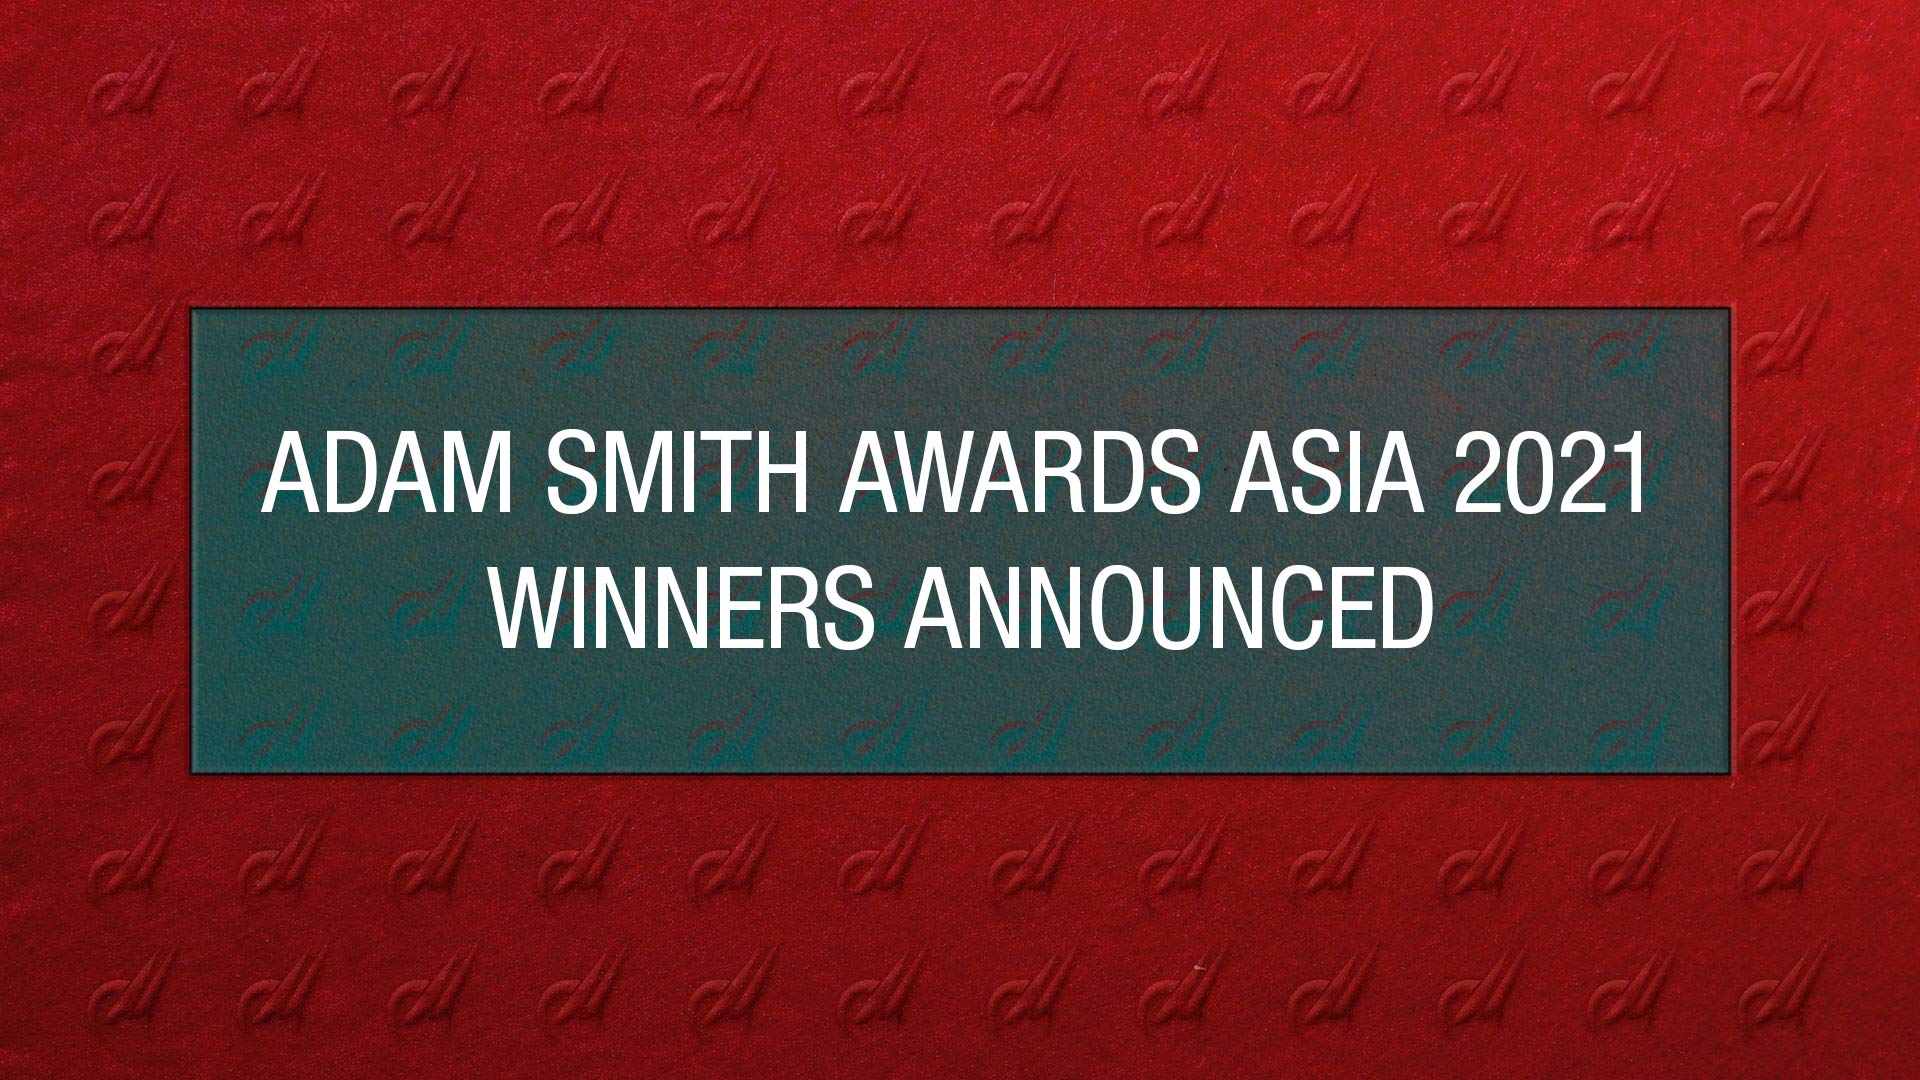 ASA Asia 2021 Winners Announced